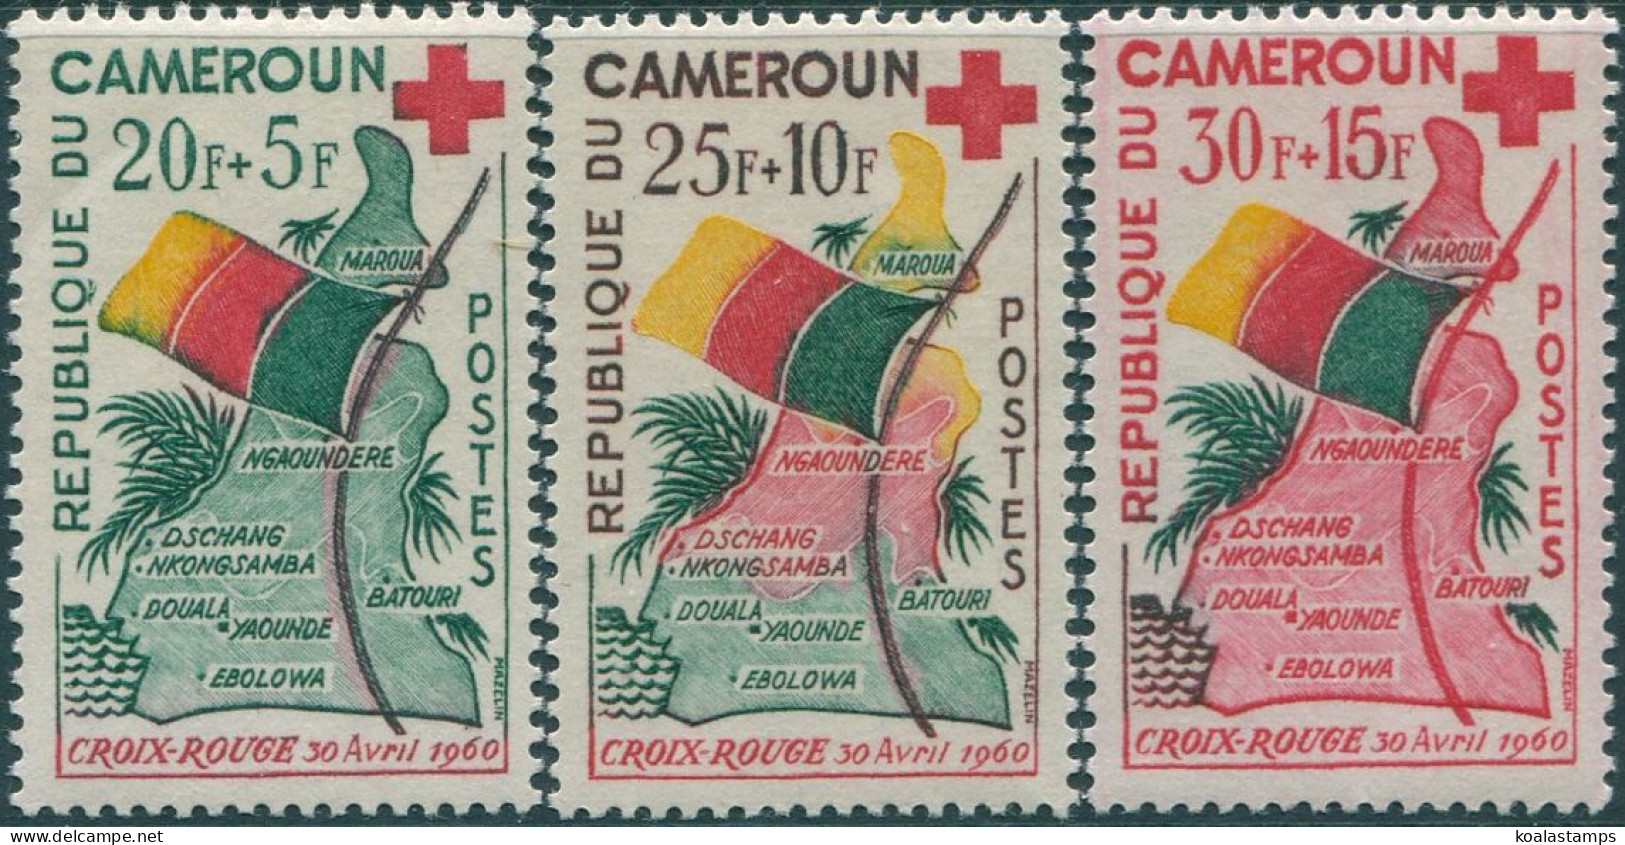 Cameroun 1961 SG280-282 Red Cross Fund Set MLH - Camerun (1960-...)